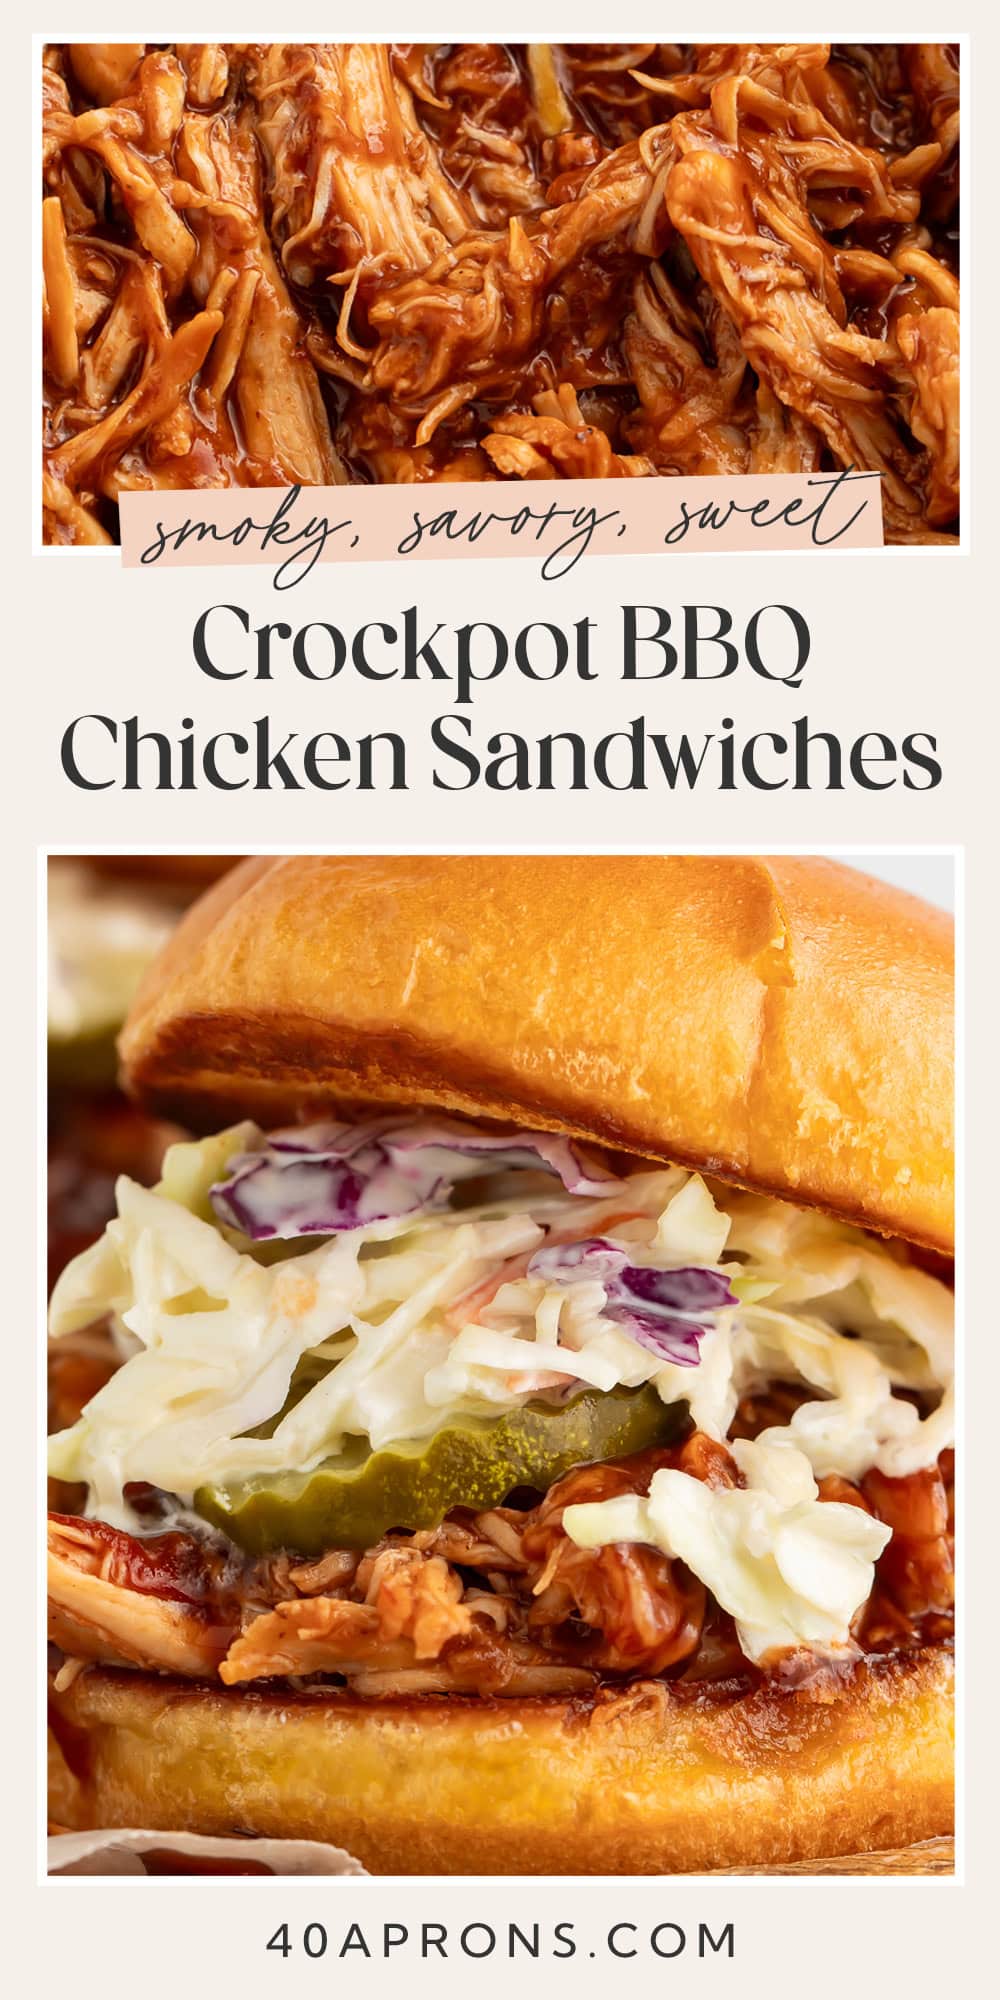 Pin graphic for Crockpot BBQ chicken sandwiches.